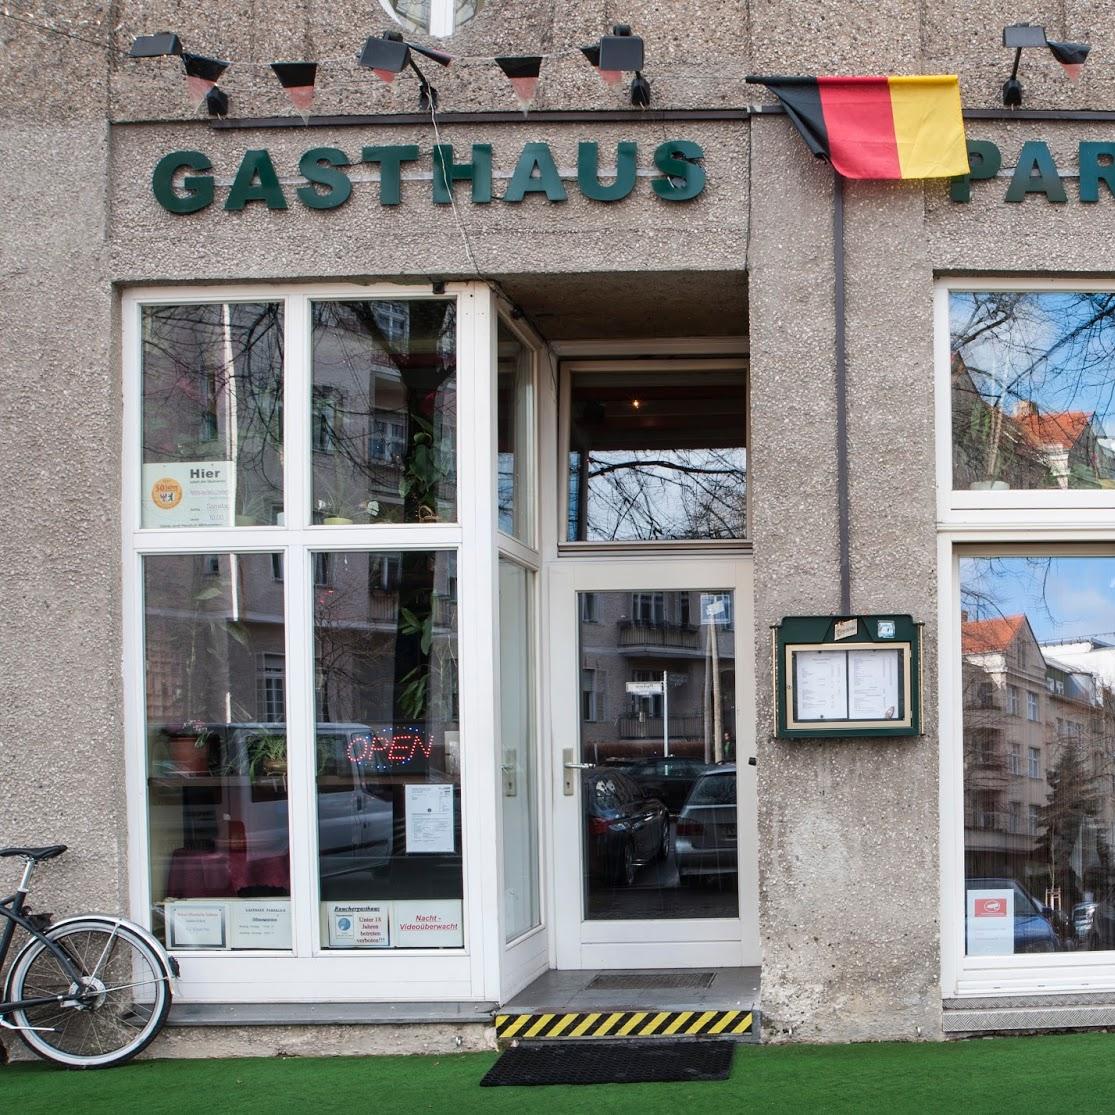 Restaurant "Gasthaus Parkblick" in Berlin